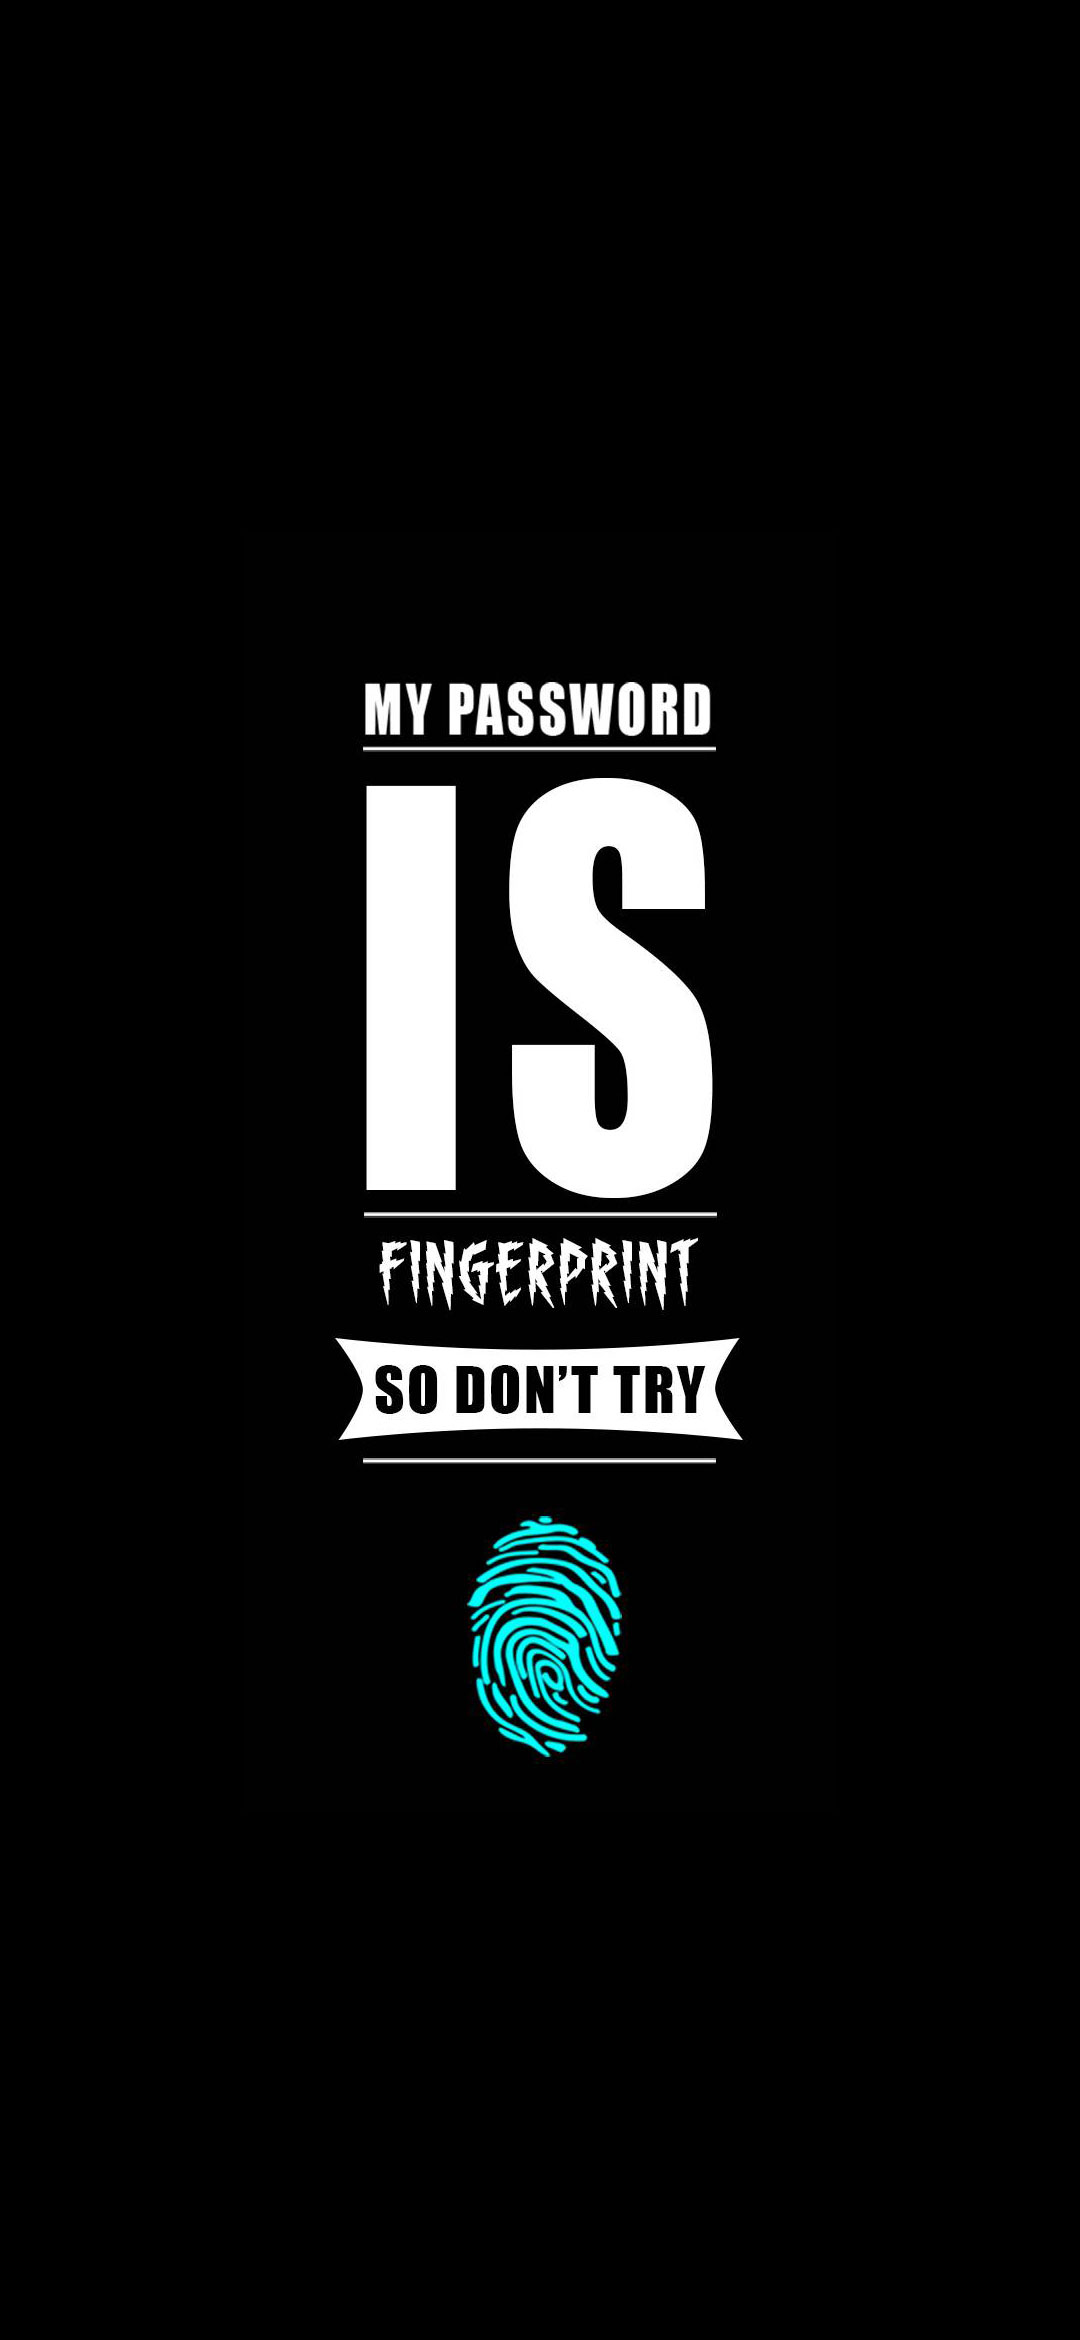 Don't Try - My Password is Fingerprint Wallpaper